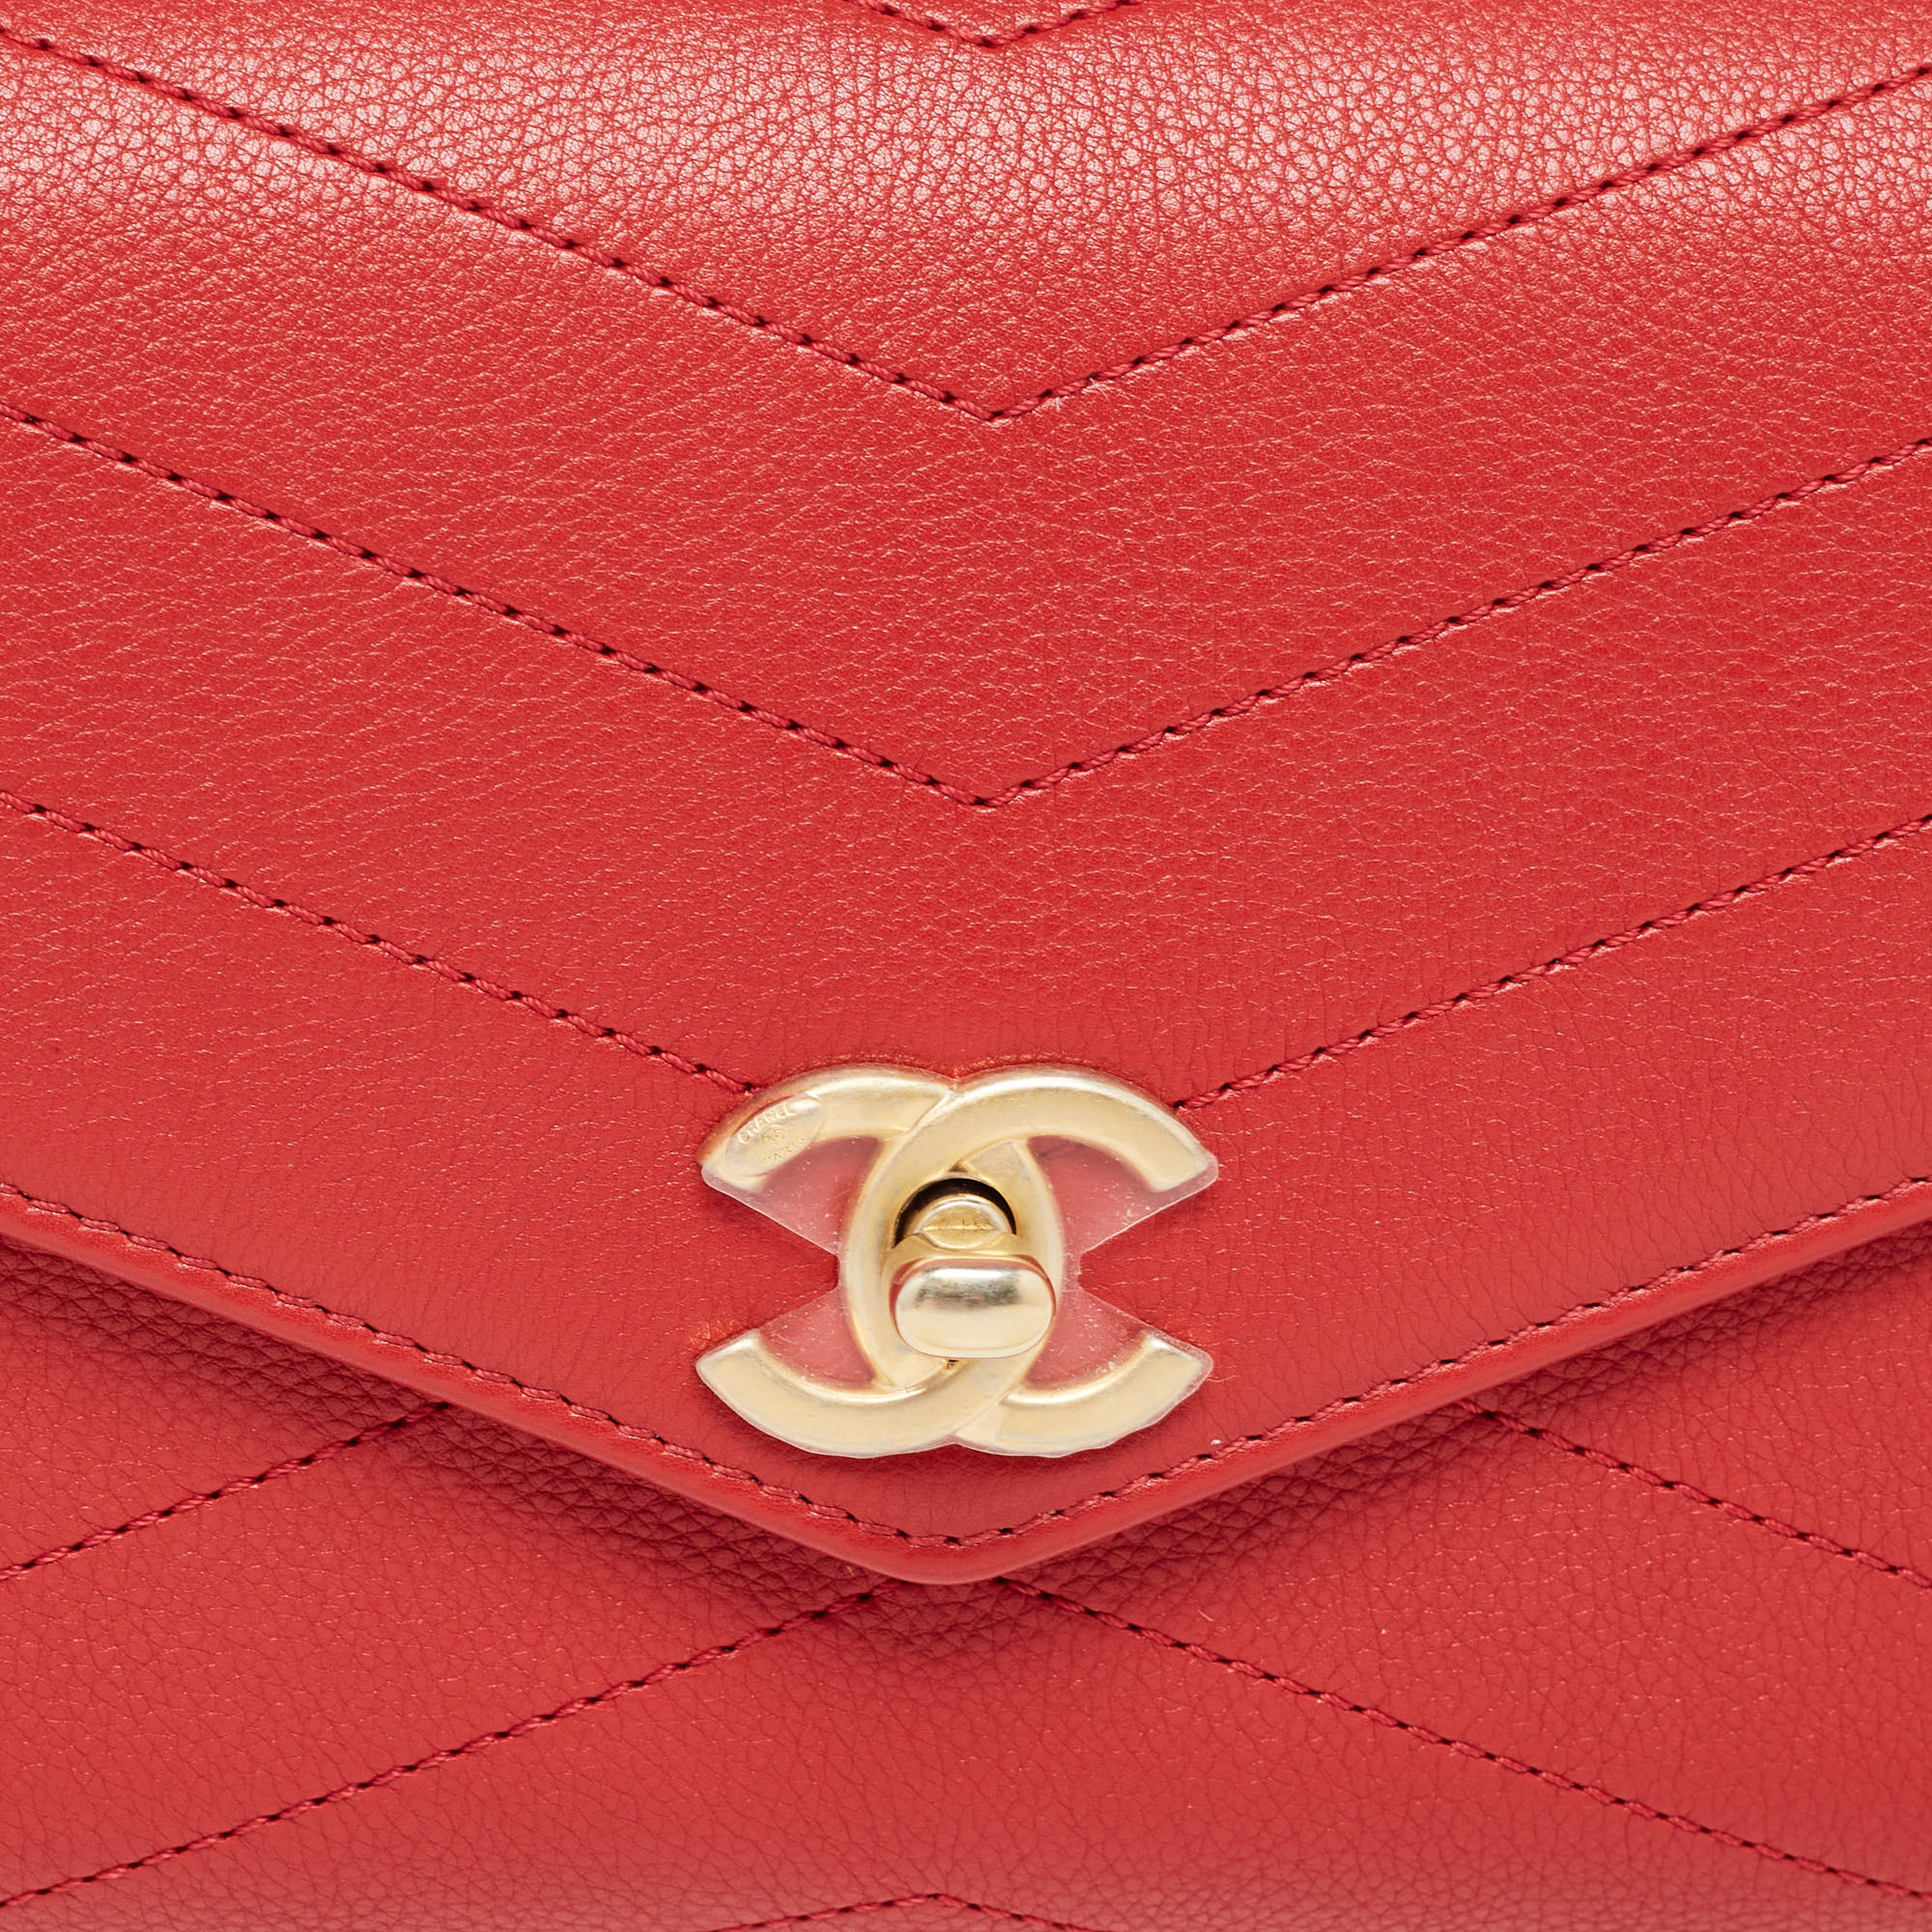 Chanel Red Chevron Leather Coco Waist Belt Bag